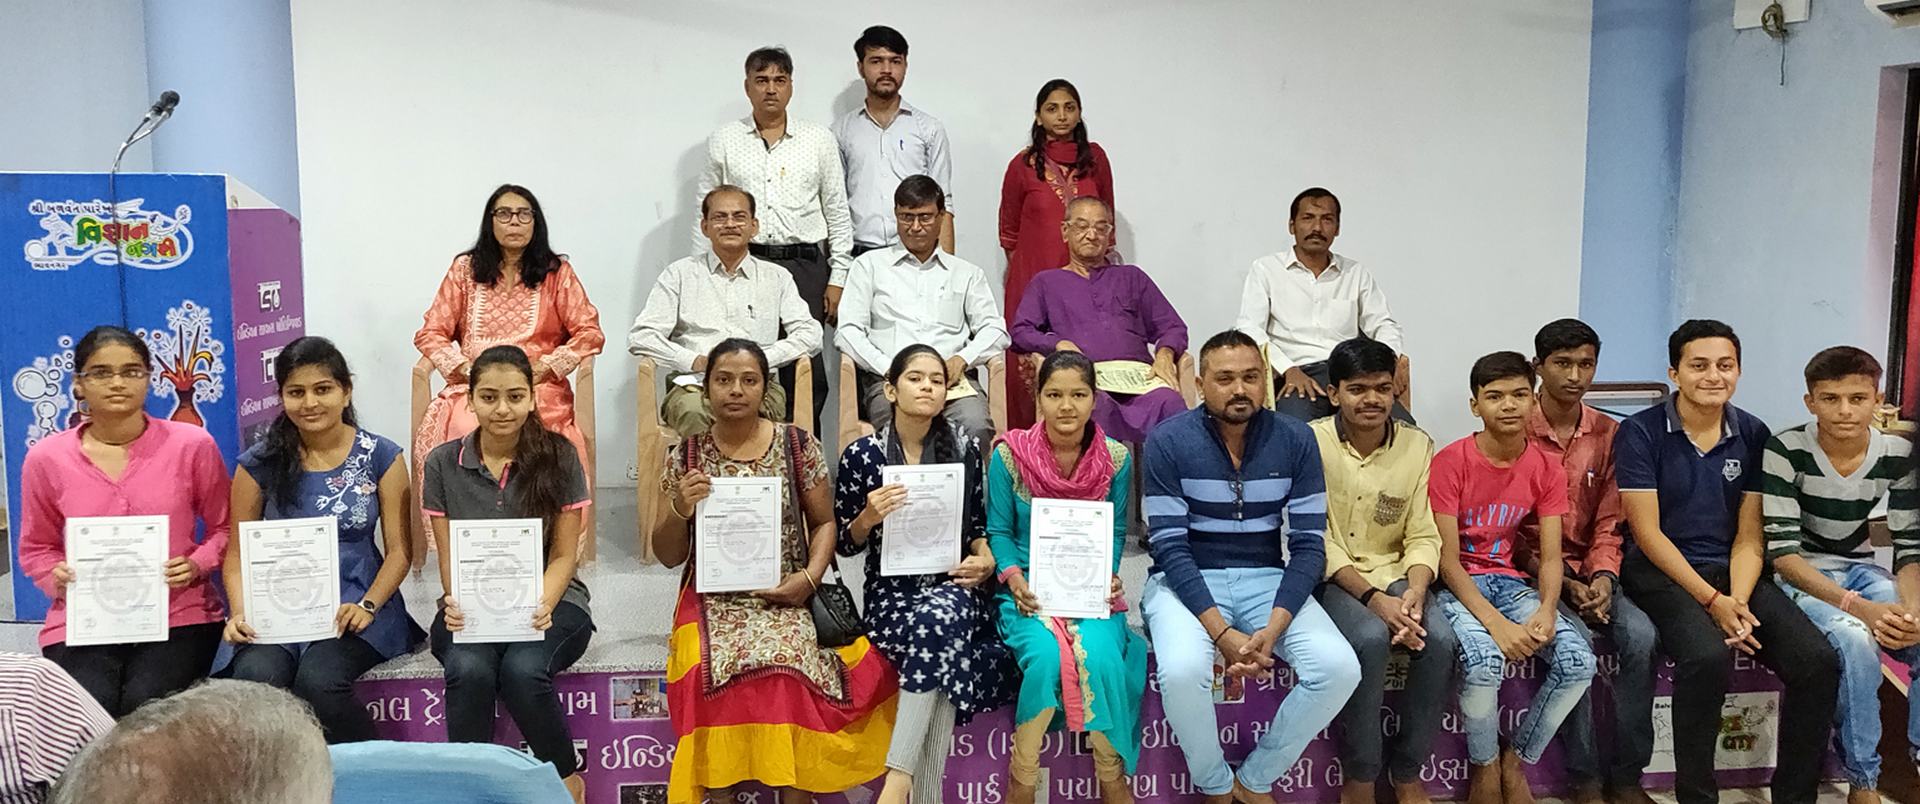 vtp kvk science city computer lab mayank parmar - mahesh rathod - chetna kothari - ashwin prajapati -  nikita andharia -certificates ceremony